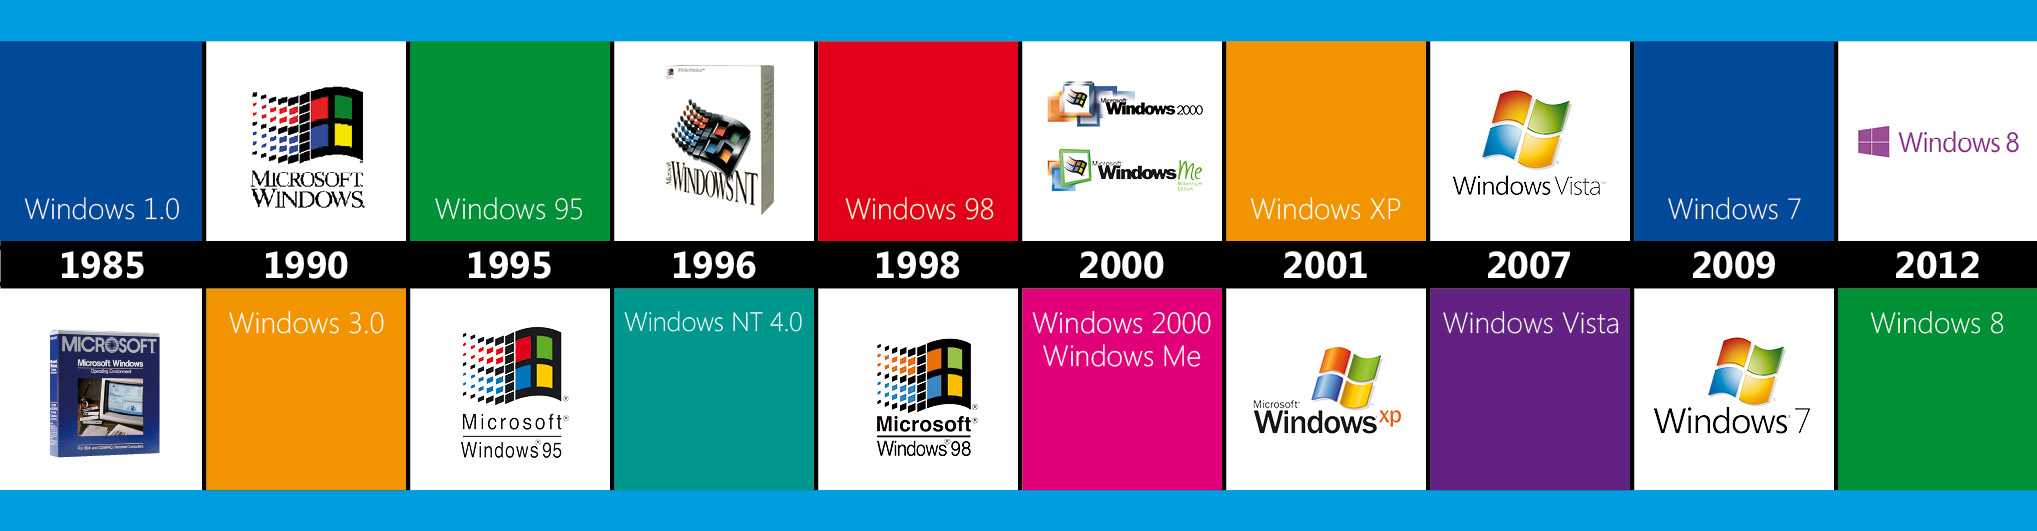 Win list. Операционная система Microsoft Windows. Хронология операционных систем Windows. Windows операционные системы Microsoft. Эволюция операционных систем Windows.